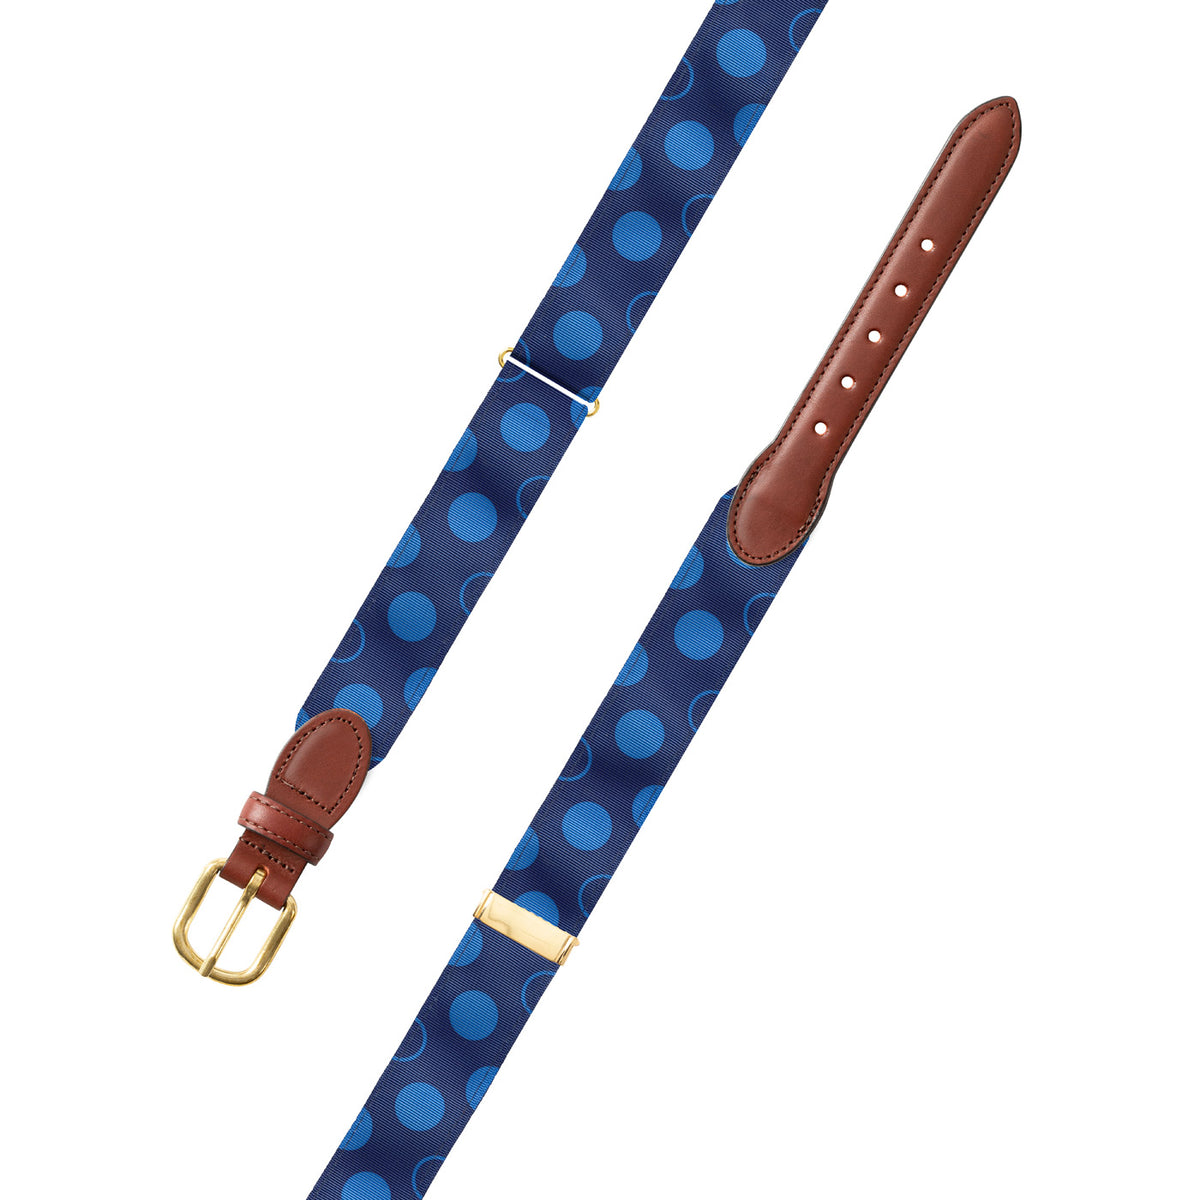 Adjustable Dots on Blue Grosgrain Belt with Brown Leather Tabs